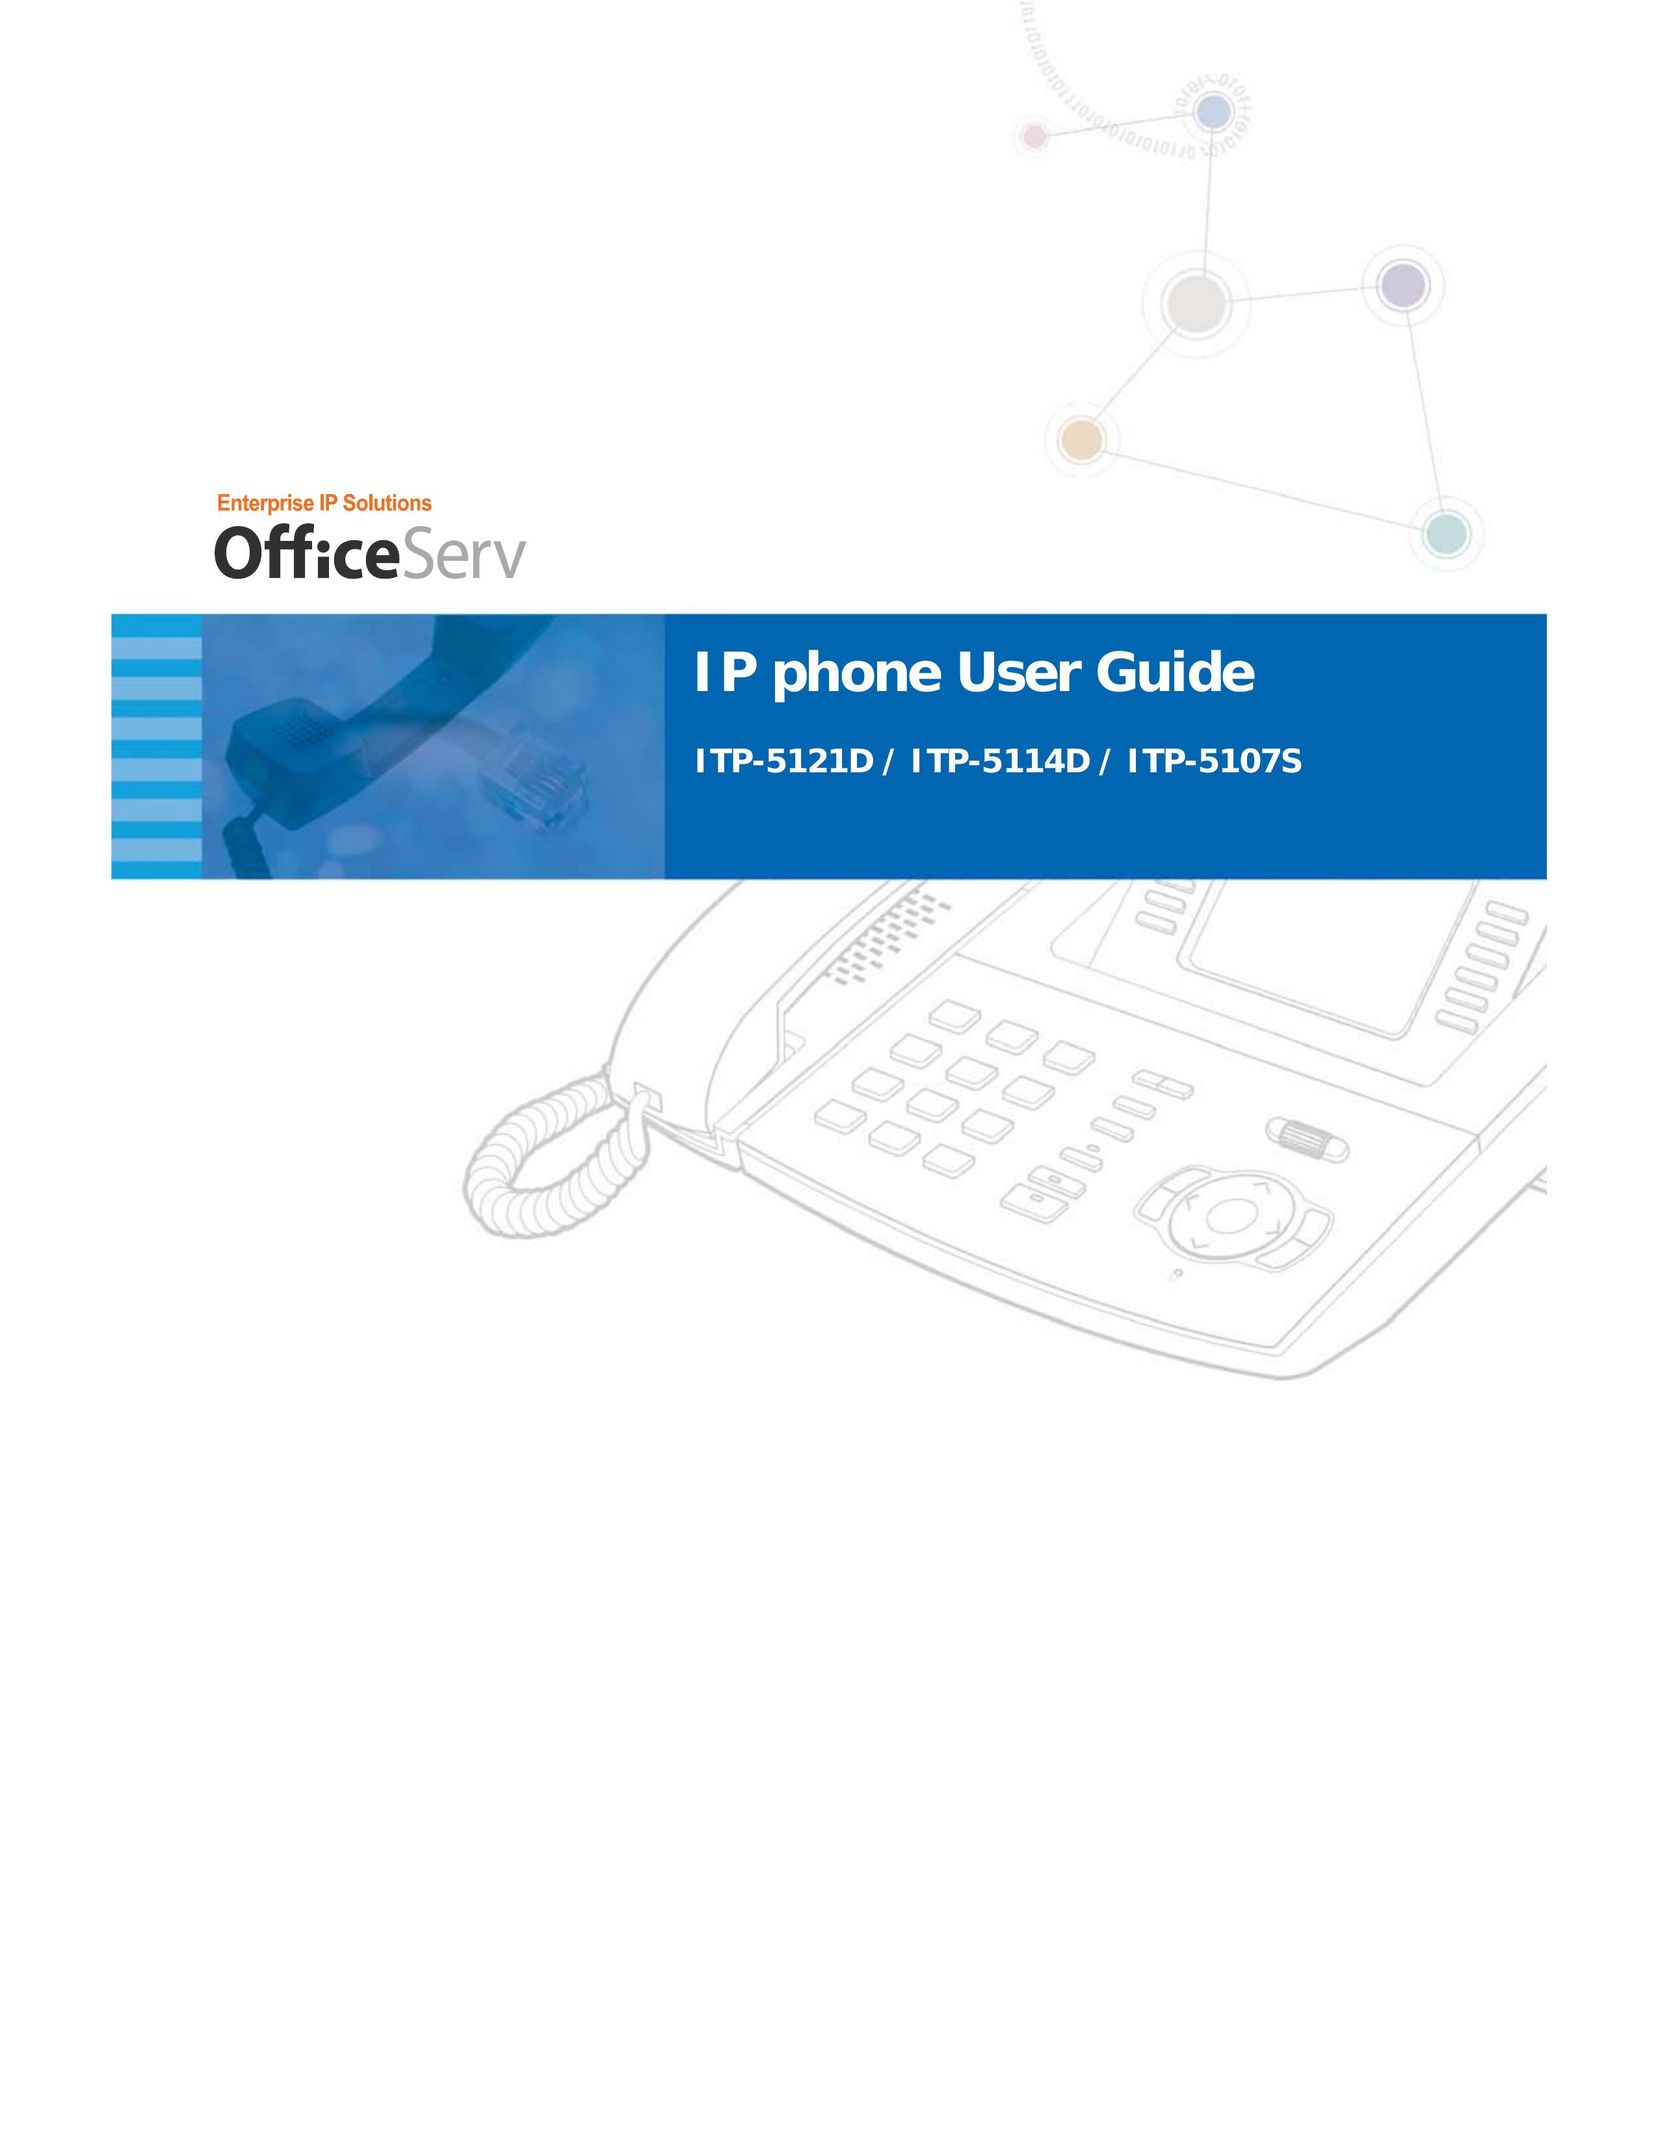 Samsung ITP-5114D Telephone User Manual